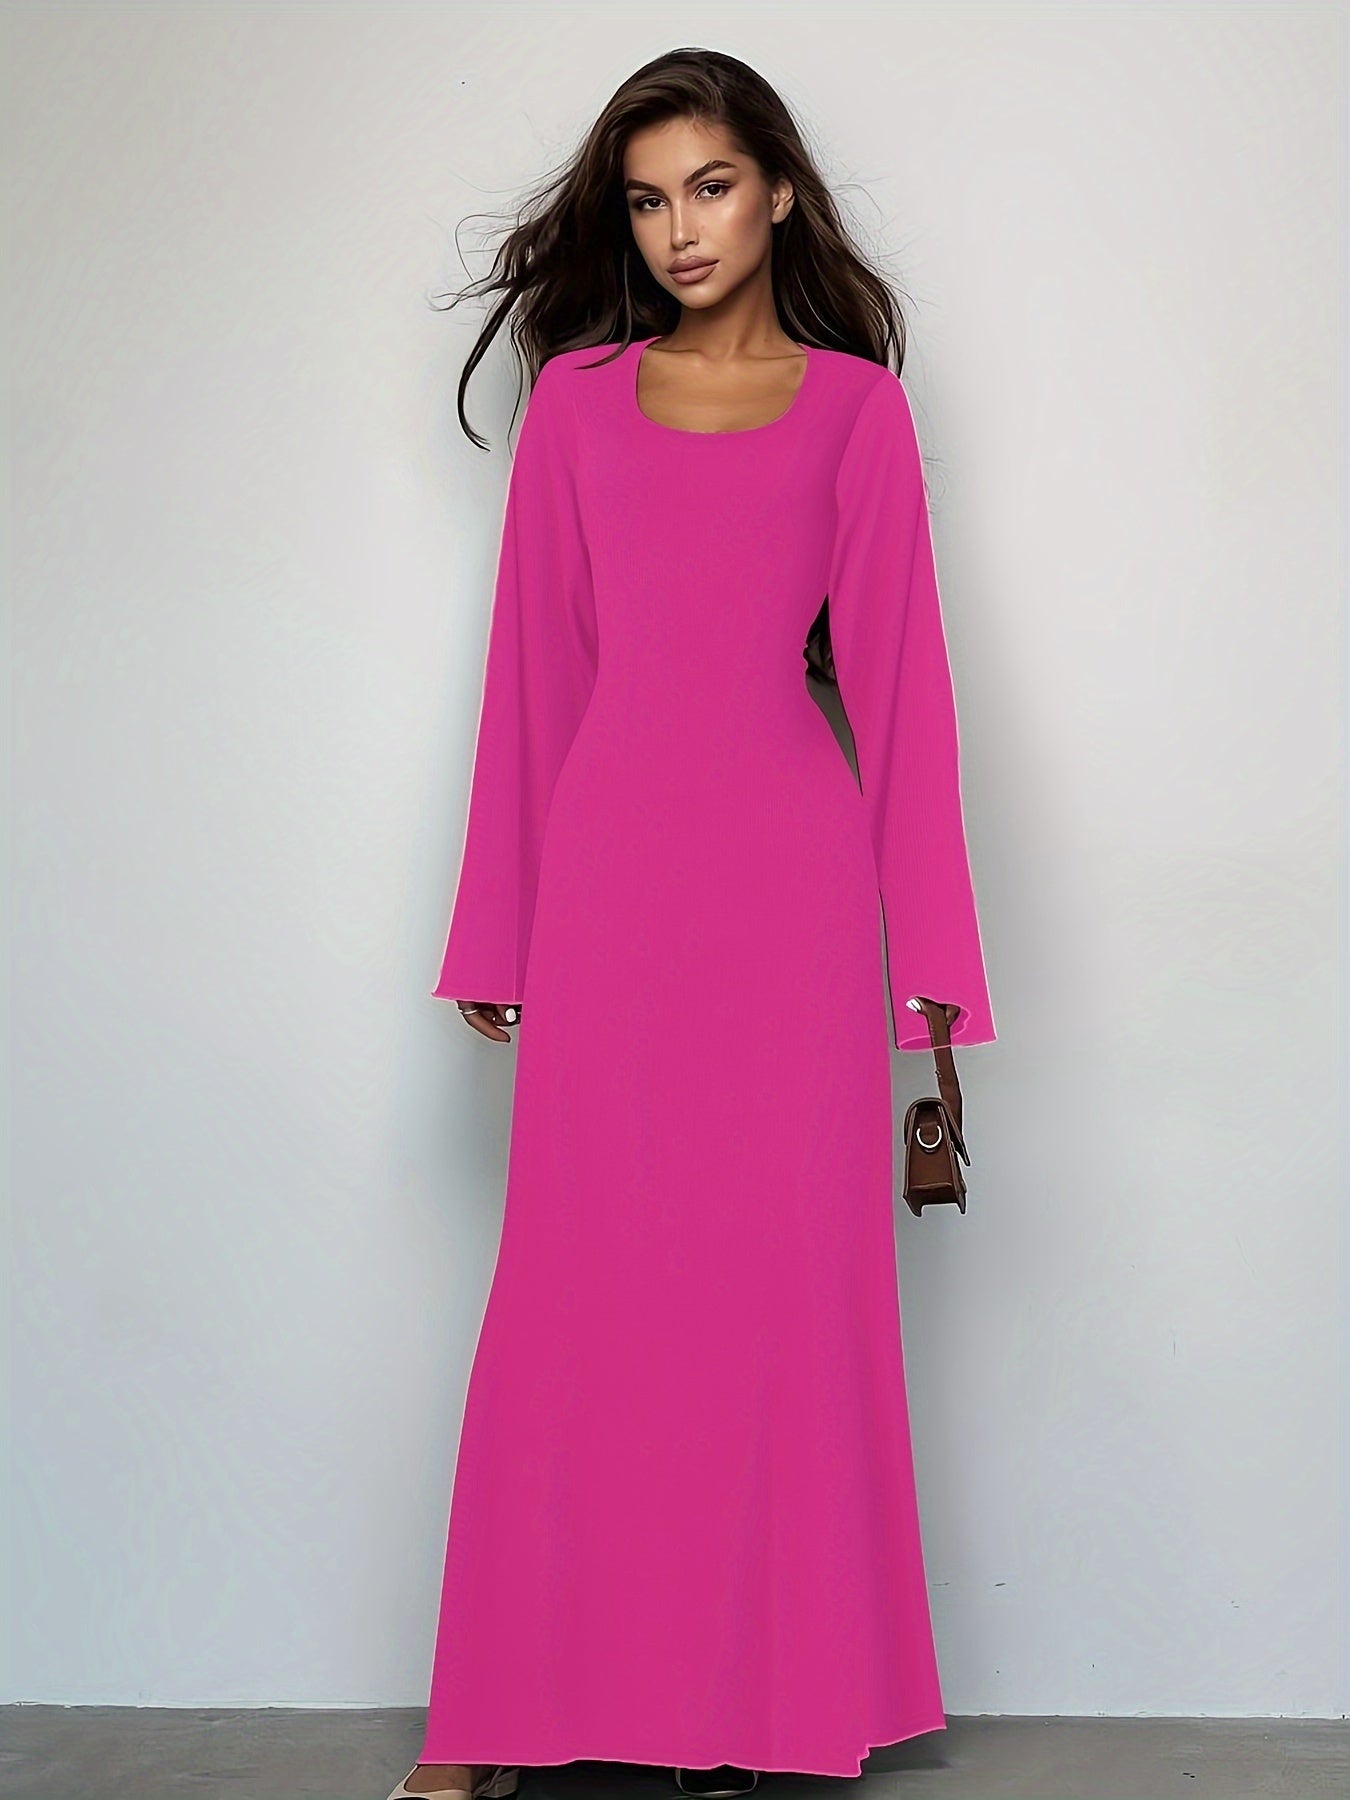 Antmvs Solid Tie Back U Neck Dress, Elegant Long Sleeve Maxi Dress, Women's Clothing